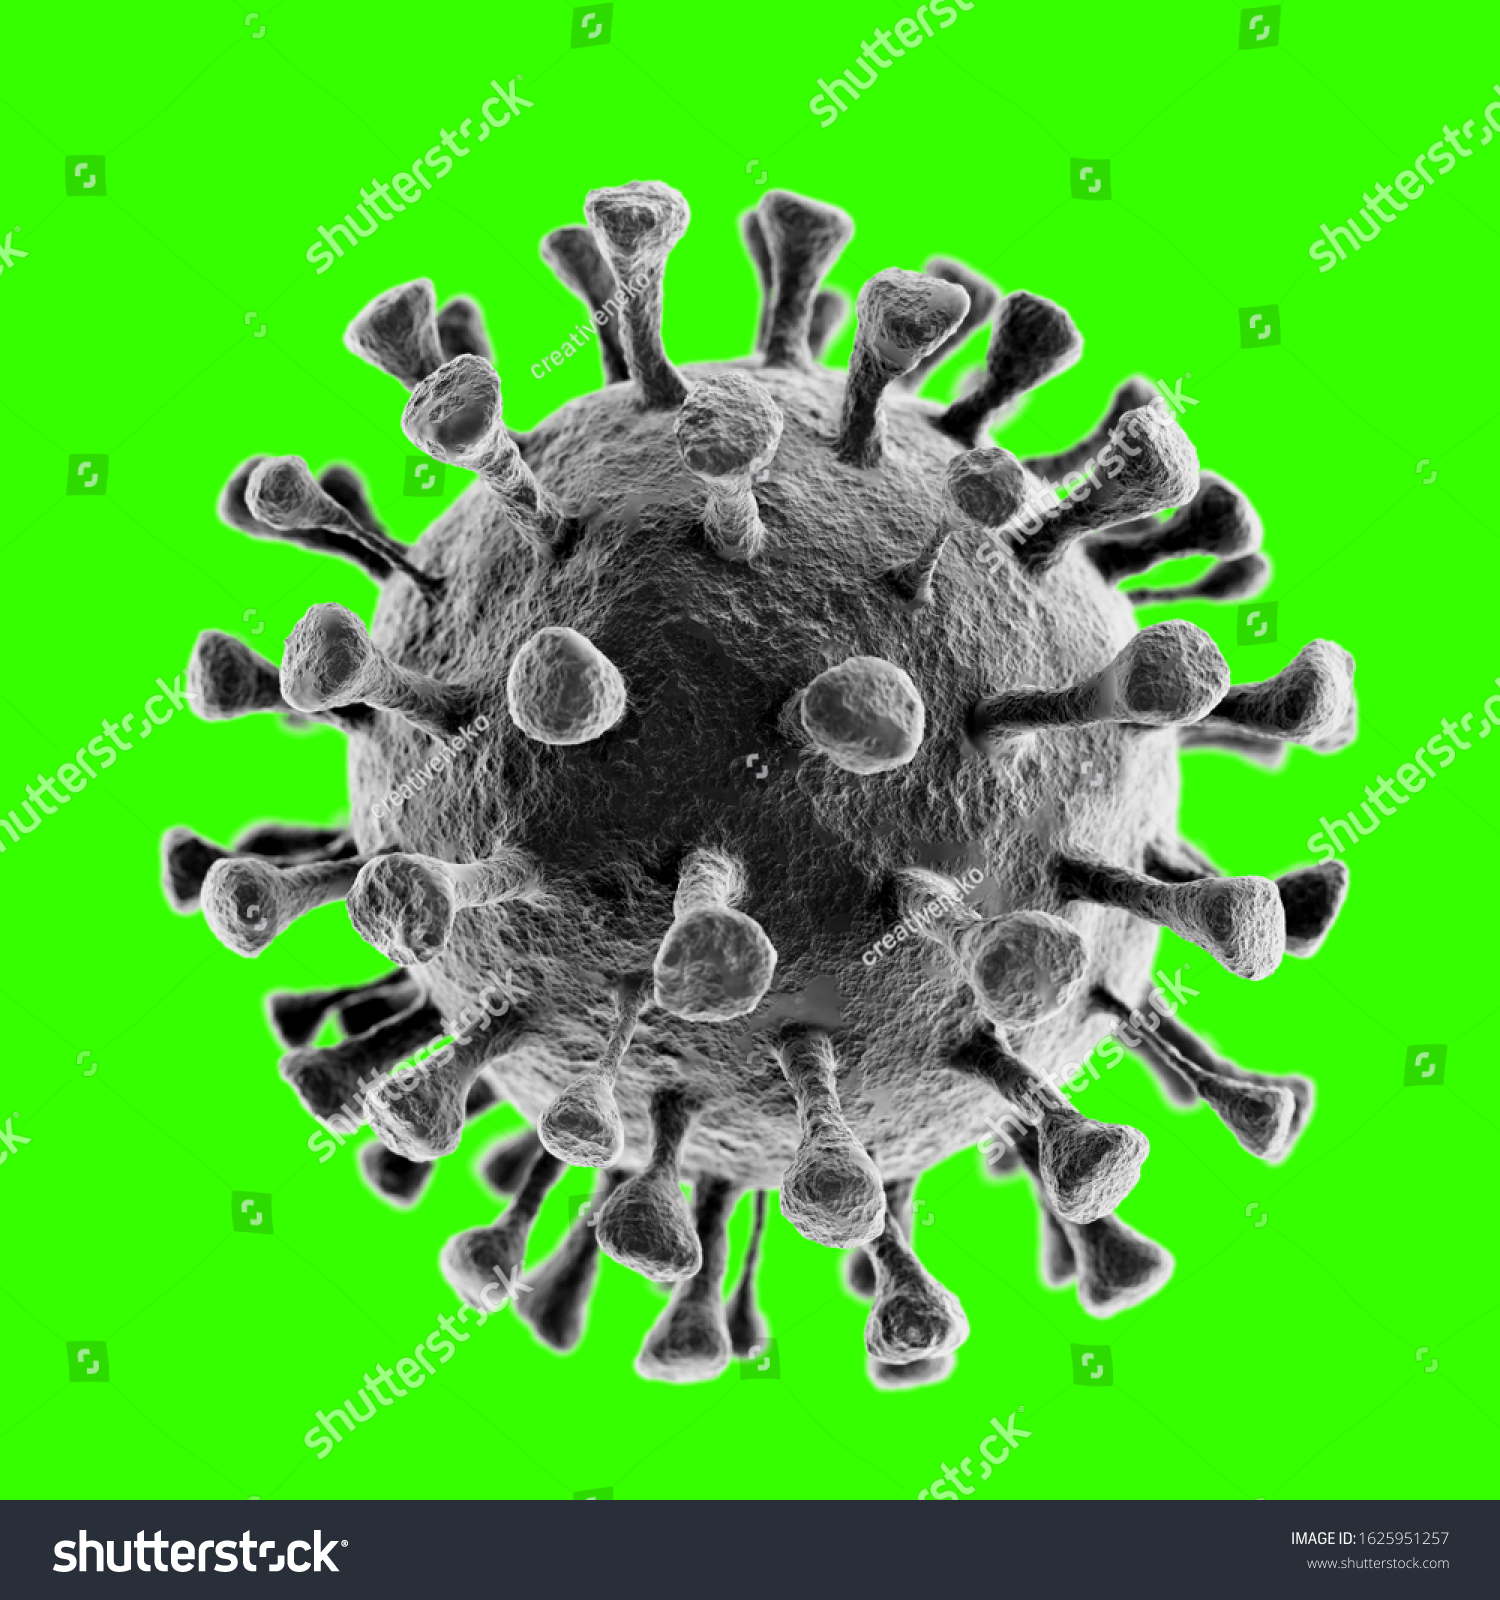 Coronavirus 2019-nCov novel coronavirus concept resposible for SARS-CoV-2 outbreak and coronaviruses influenza as dangerous flu strain cases as a pandemic. Microscope virus close up. 3d rendering.
 #1625951257